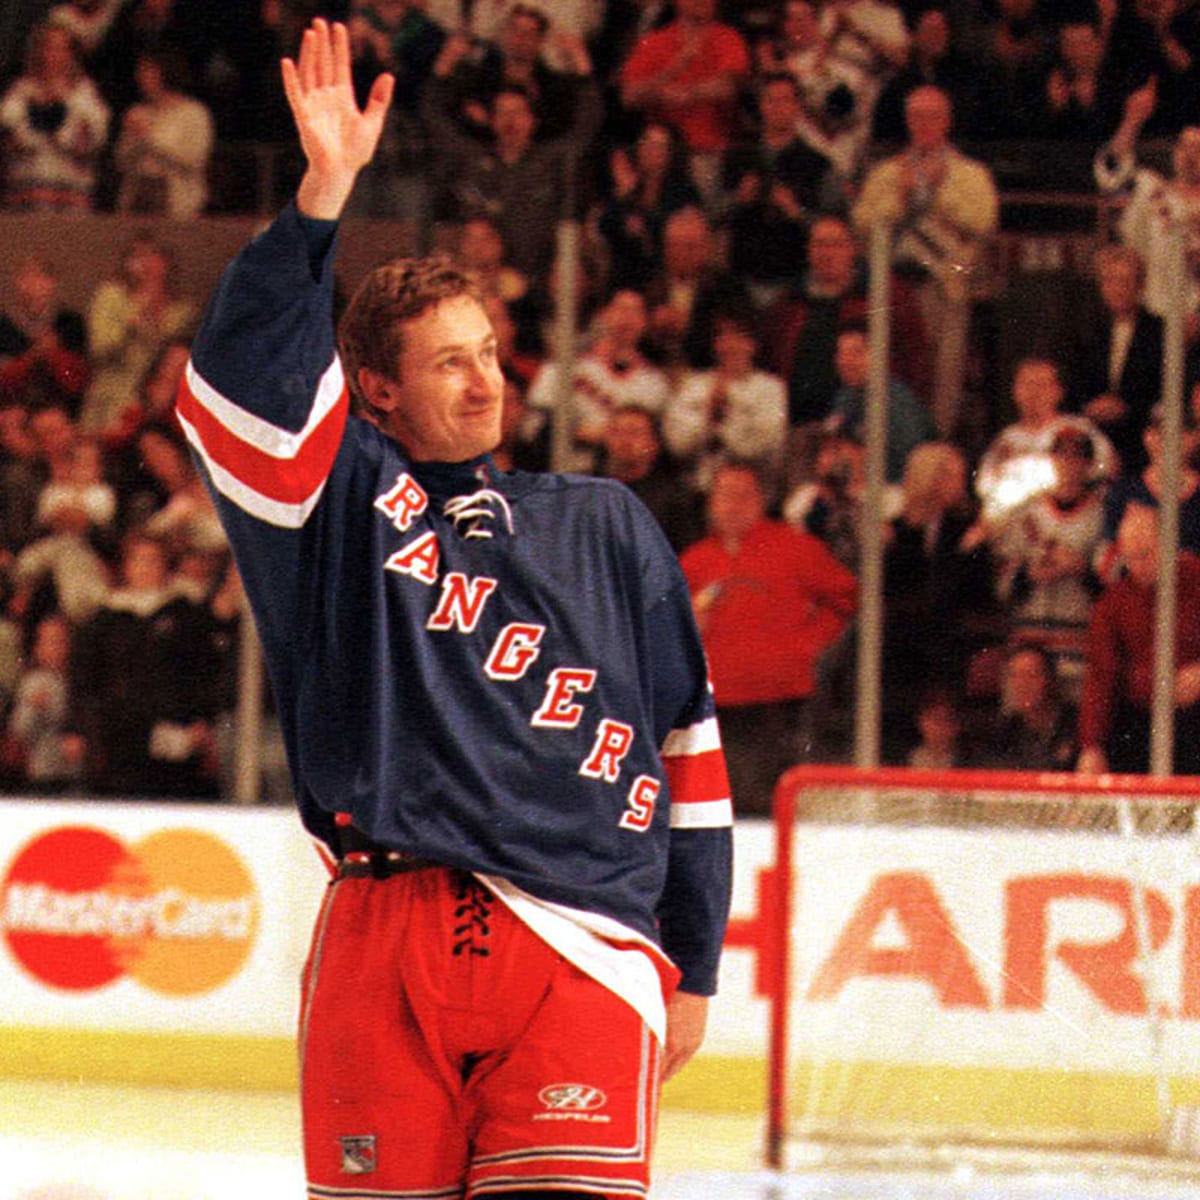  Youth 99 Gretzky Hockey Jersey 1991 Team Canada Ice